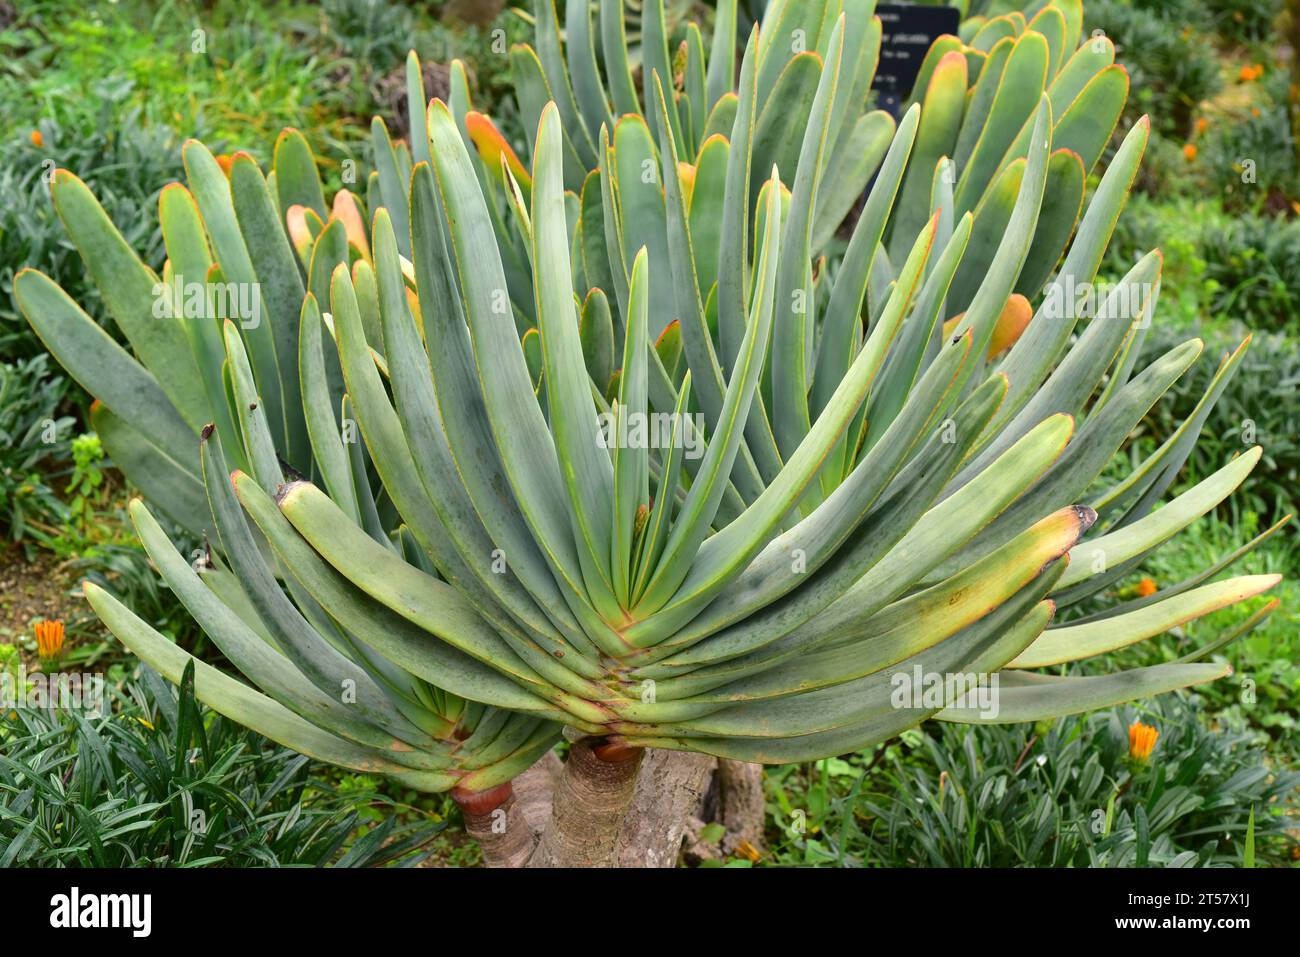 Fan aloe (Kumara plicatilis or Aloe plicatilis) is a robust succulent plant endemic to Cape Region, South Africa. Stock Photo